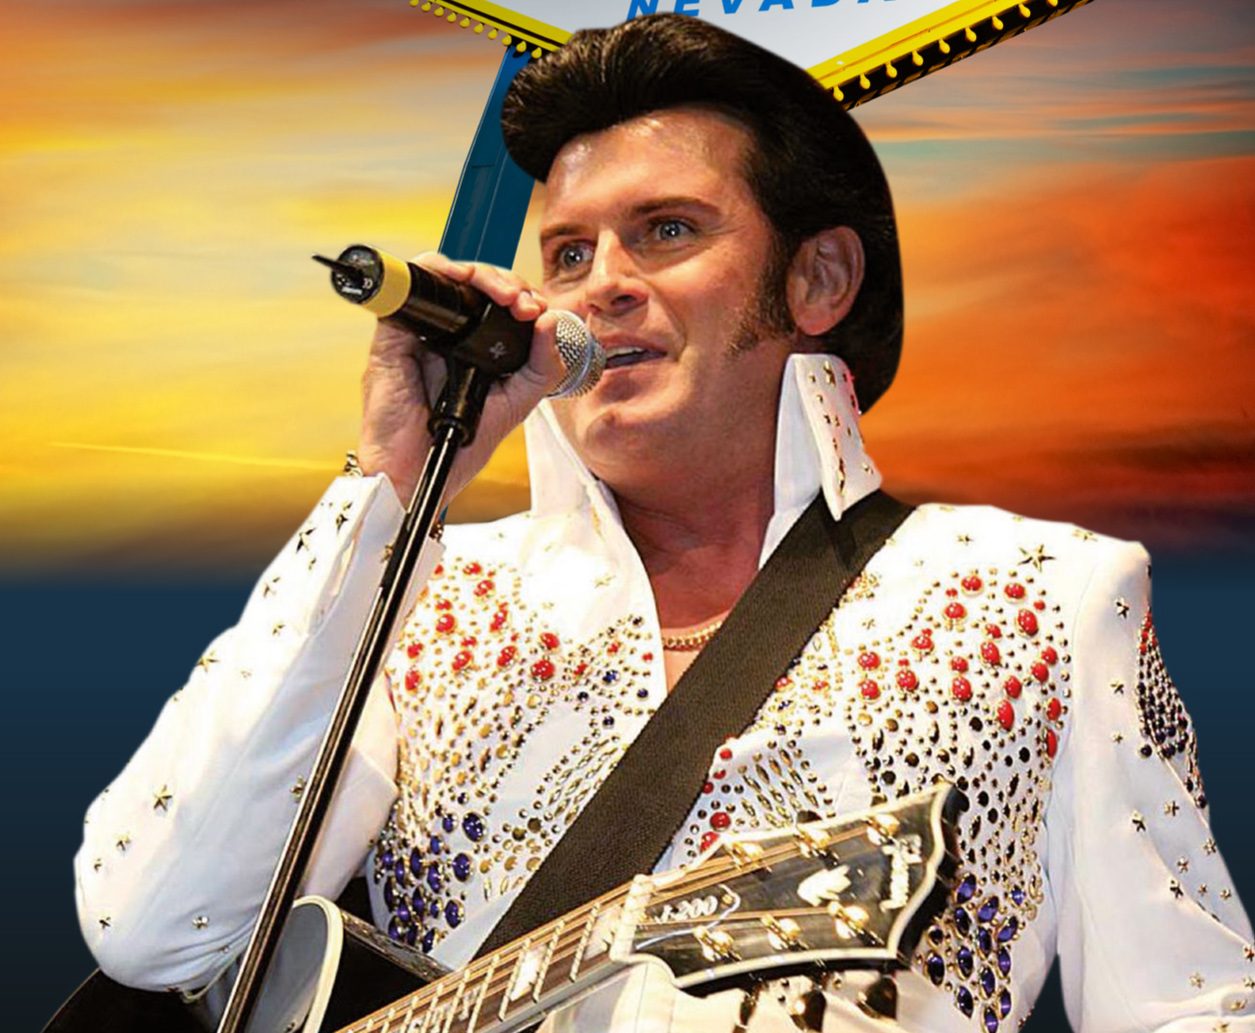 Rusty Elvis Tribute Artist